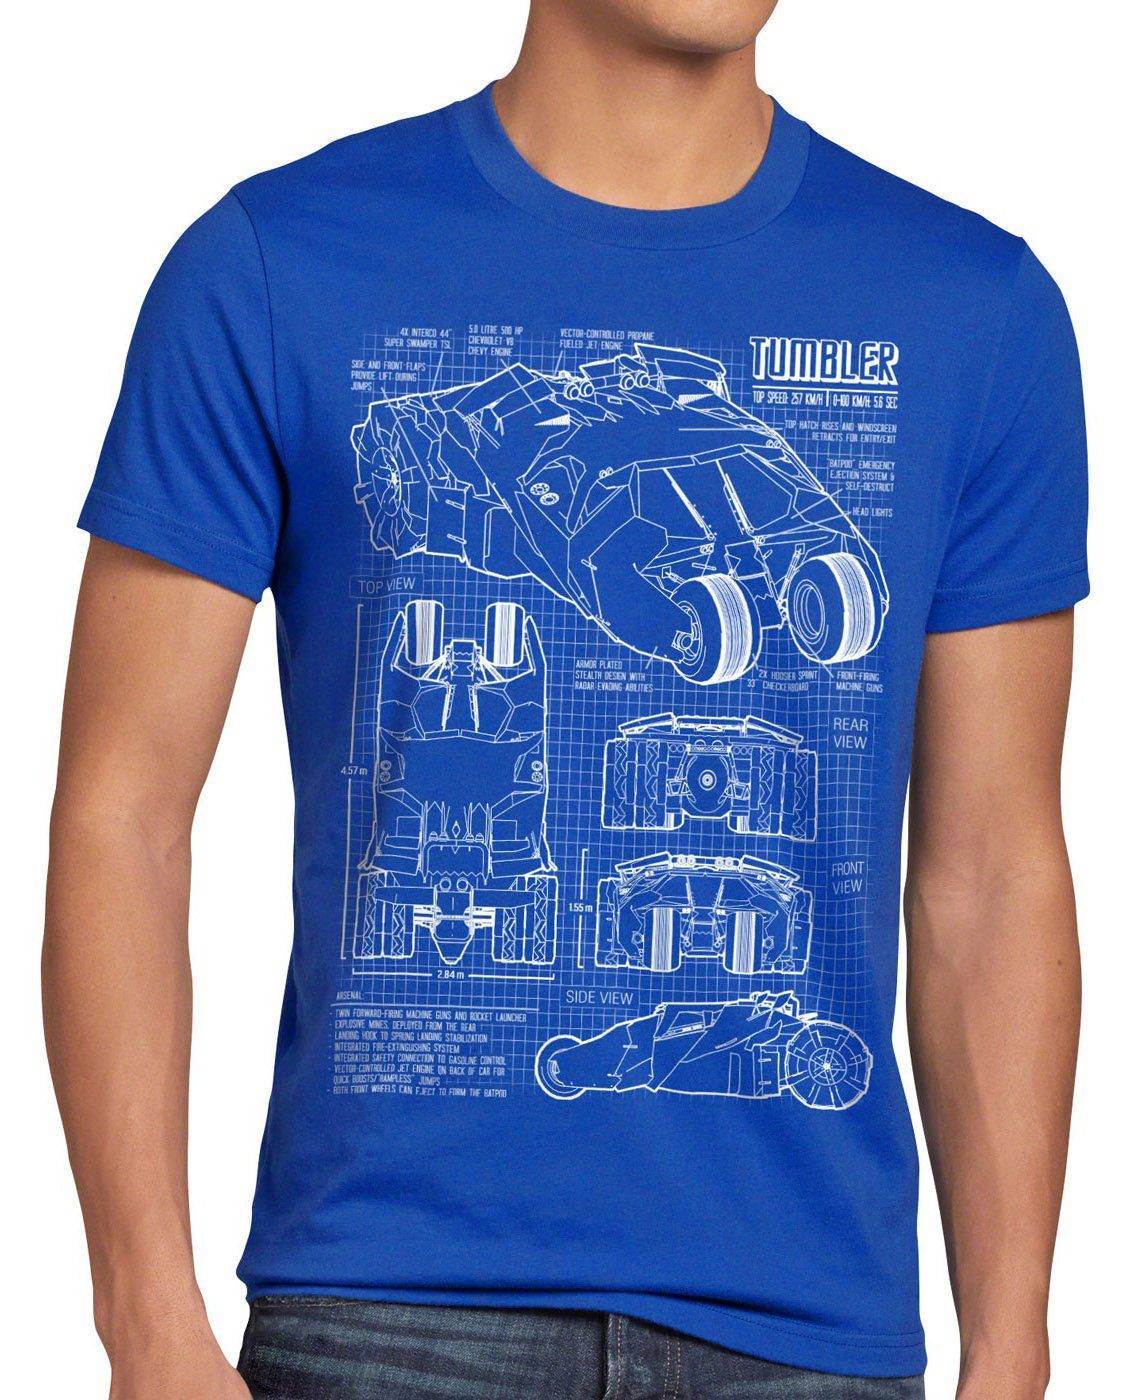 Gotham Tumbler mobil Print-Shirt Bat T-Shirt dark man style3 film Herren Blaupause knight game city